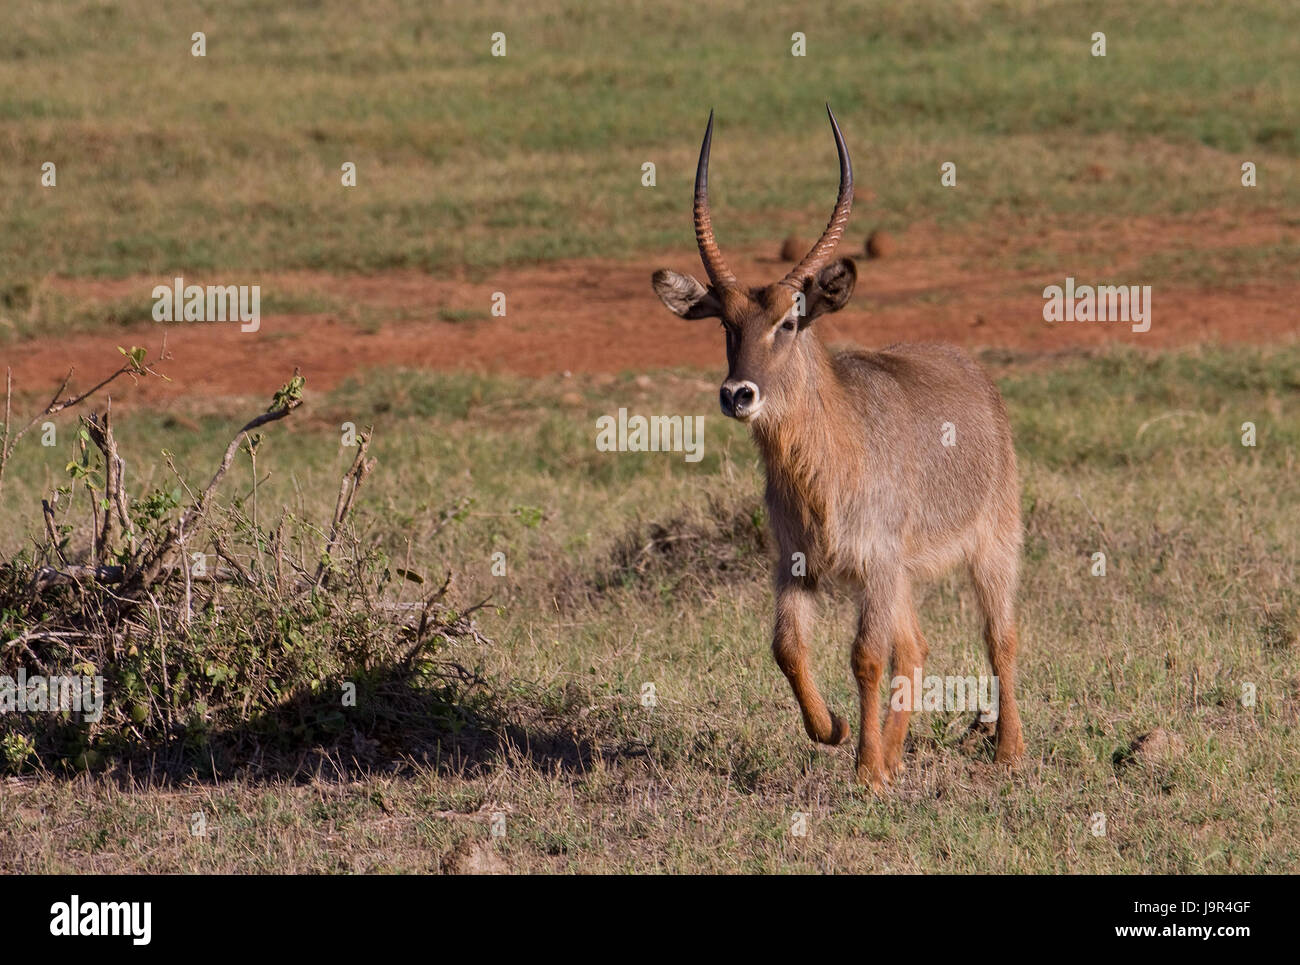 national park, africa, kenya, wildlife, safari, antelope, gazelle, tanzania, Stock Photo